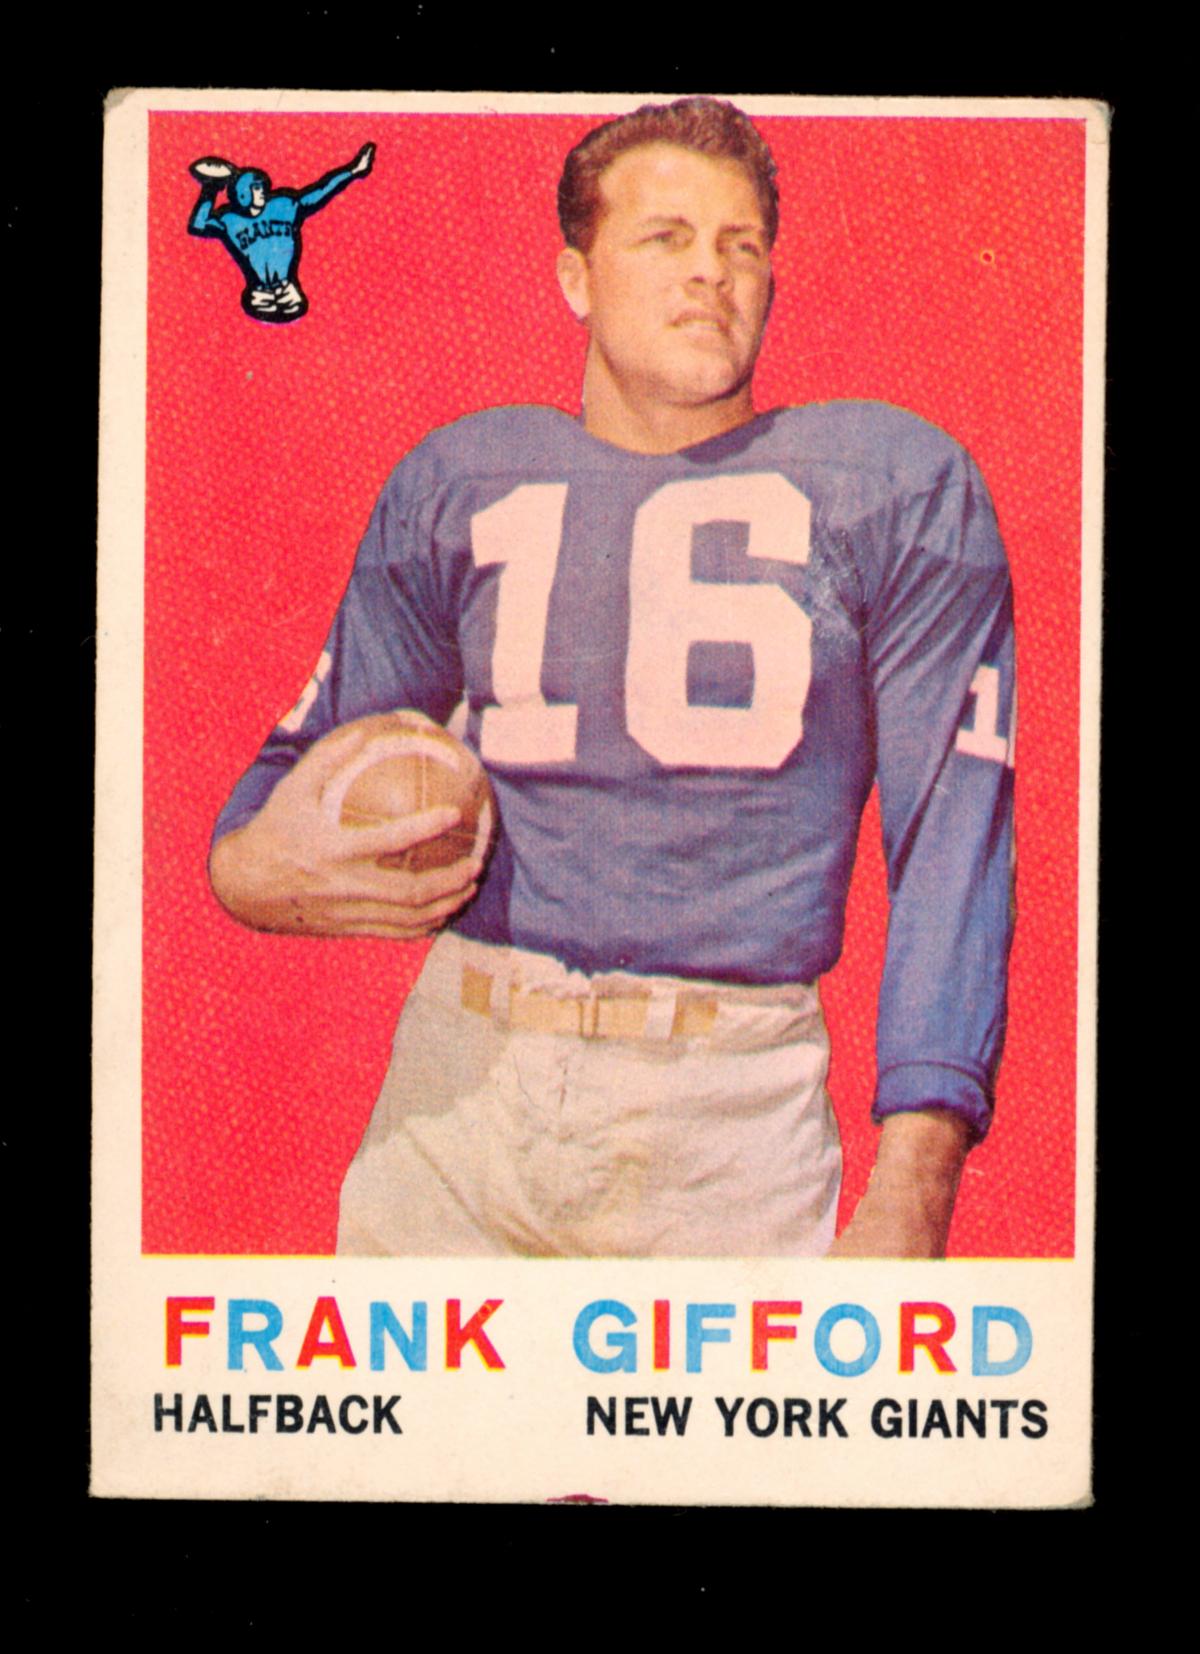 1959 Topps Football Card #20 Hall of Famer Fank Gifford New York Giants